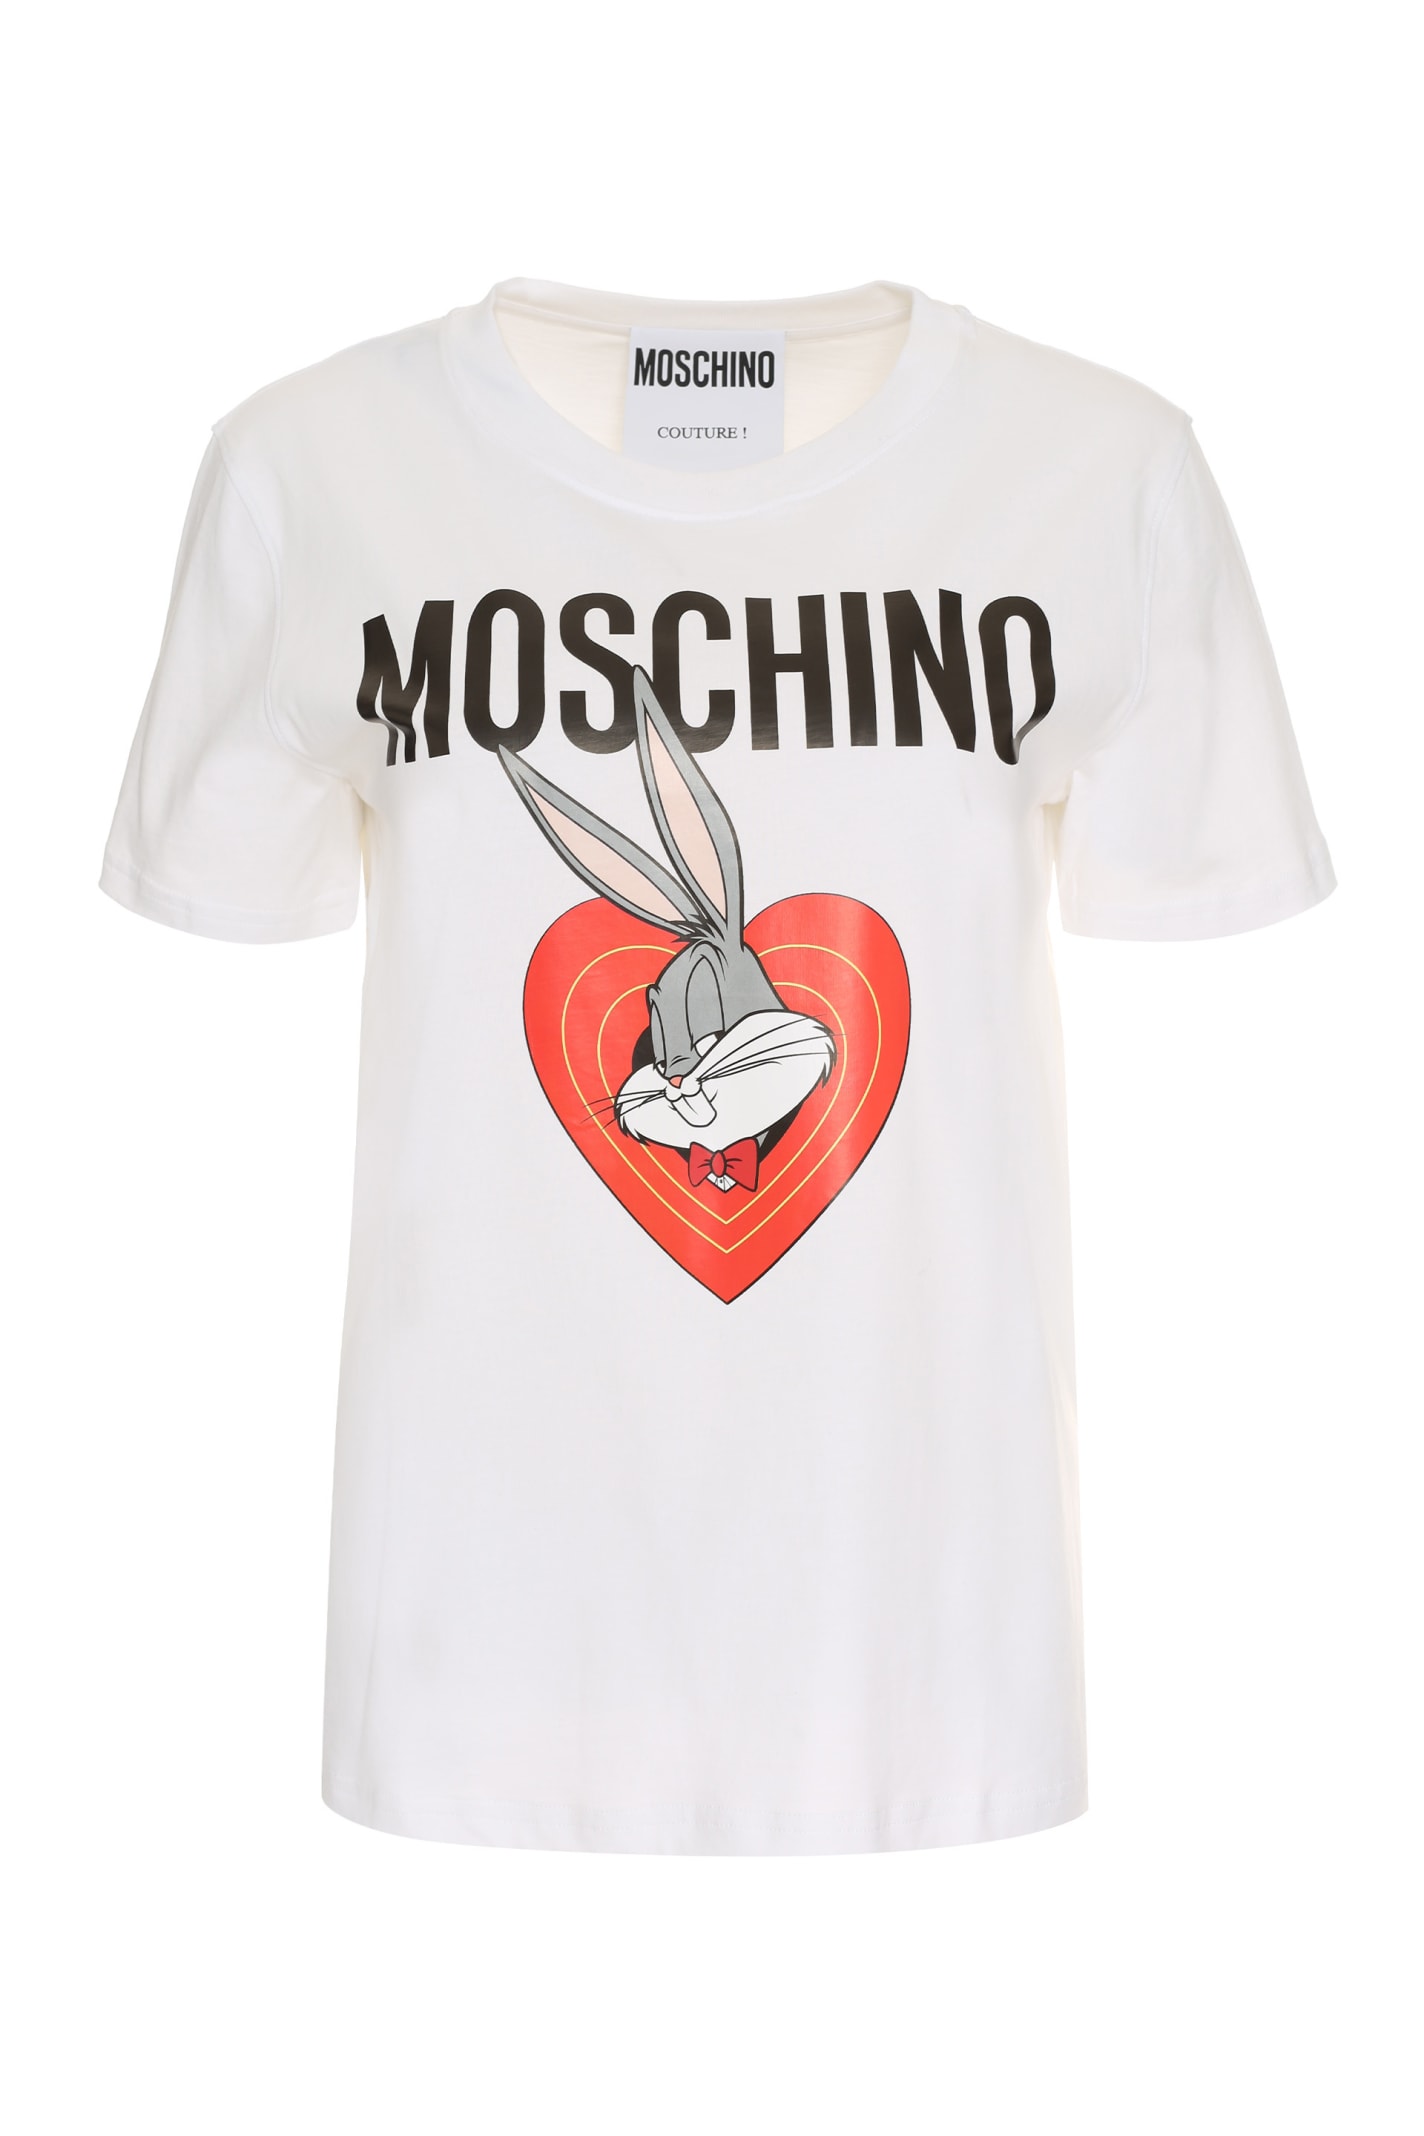 Moschino Bugs Bunny Print Cotton T-shirt